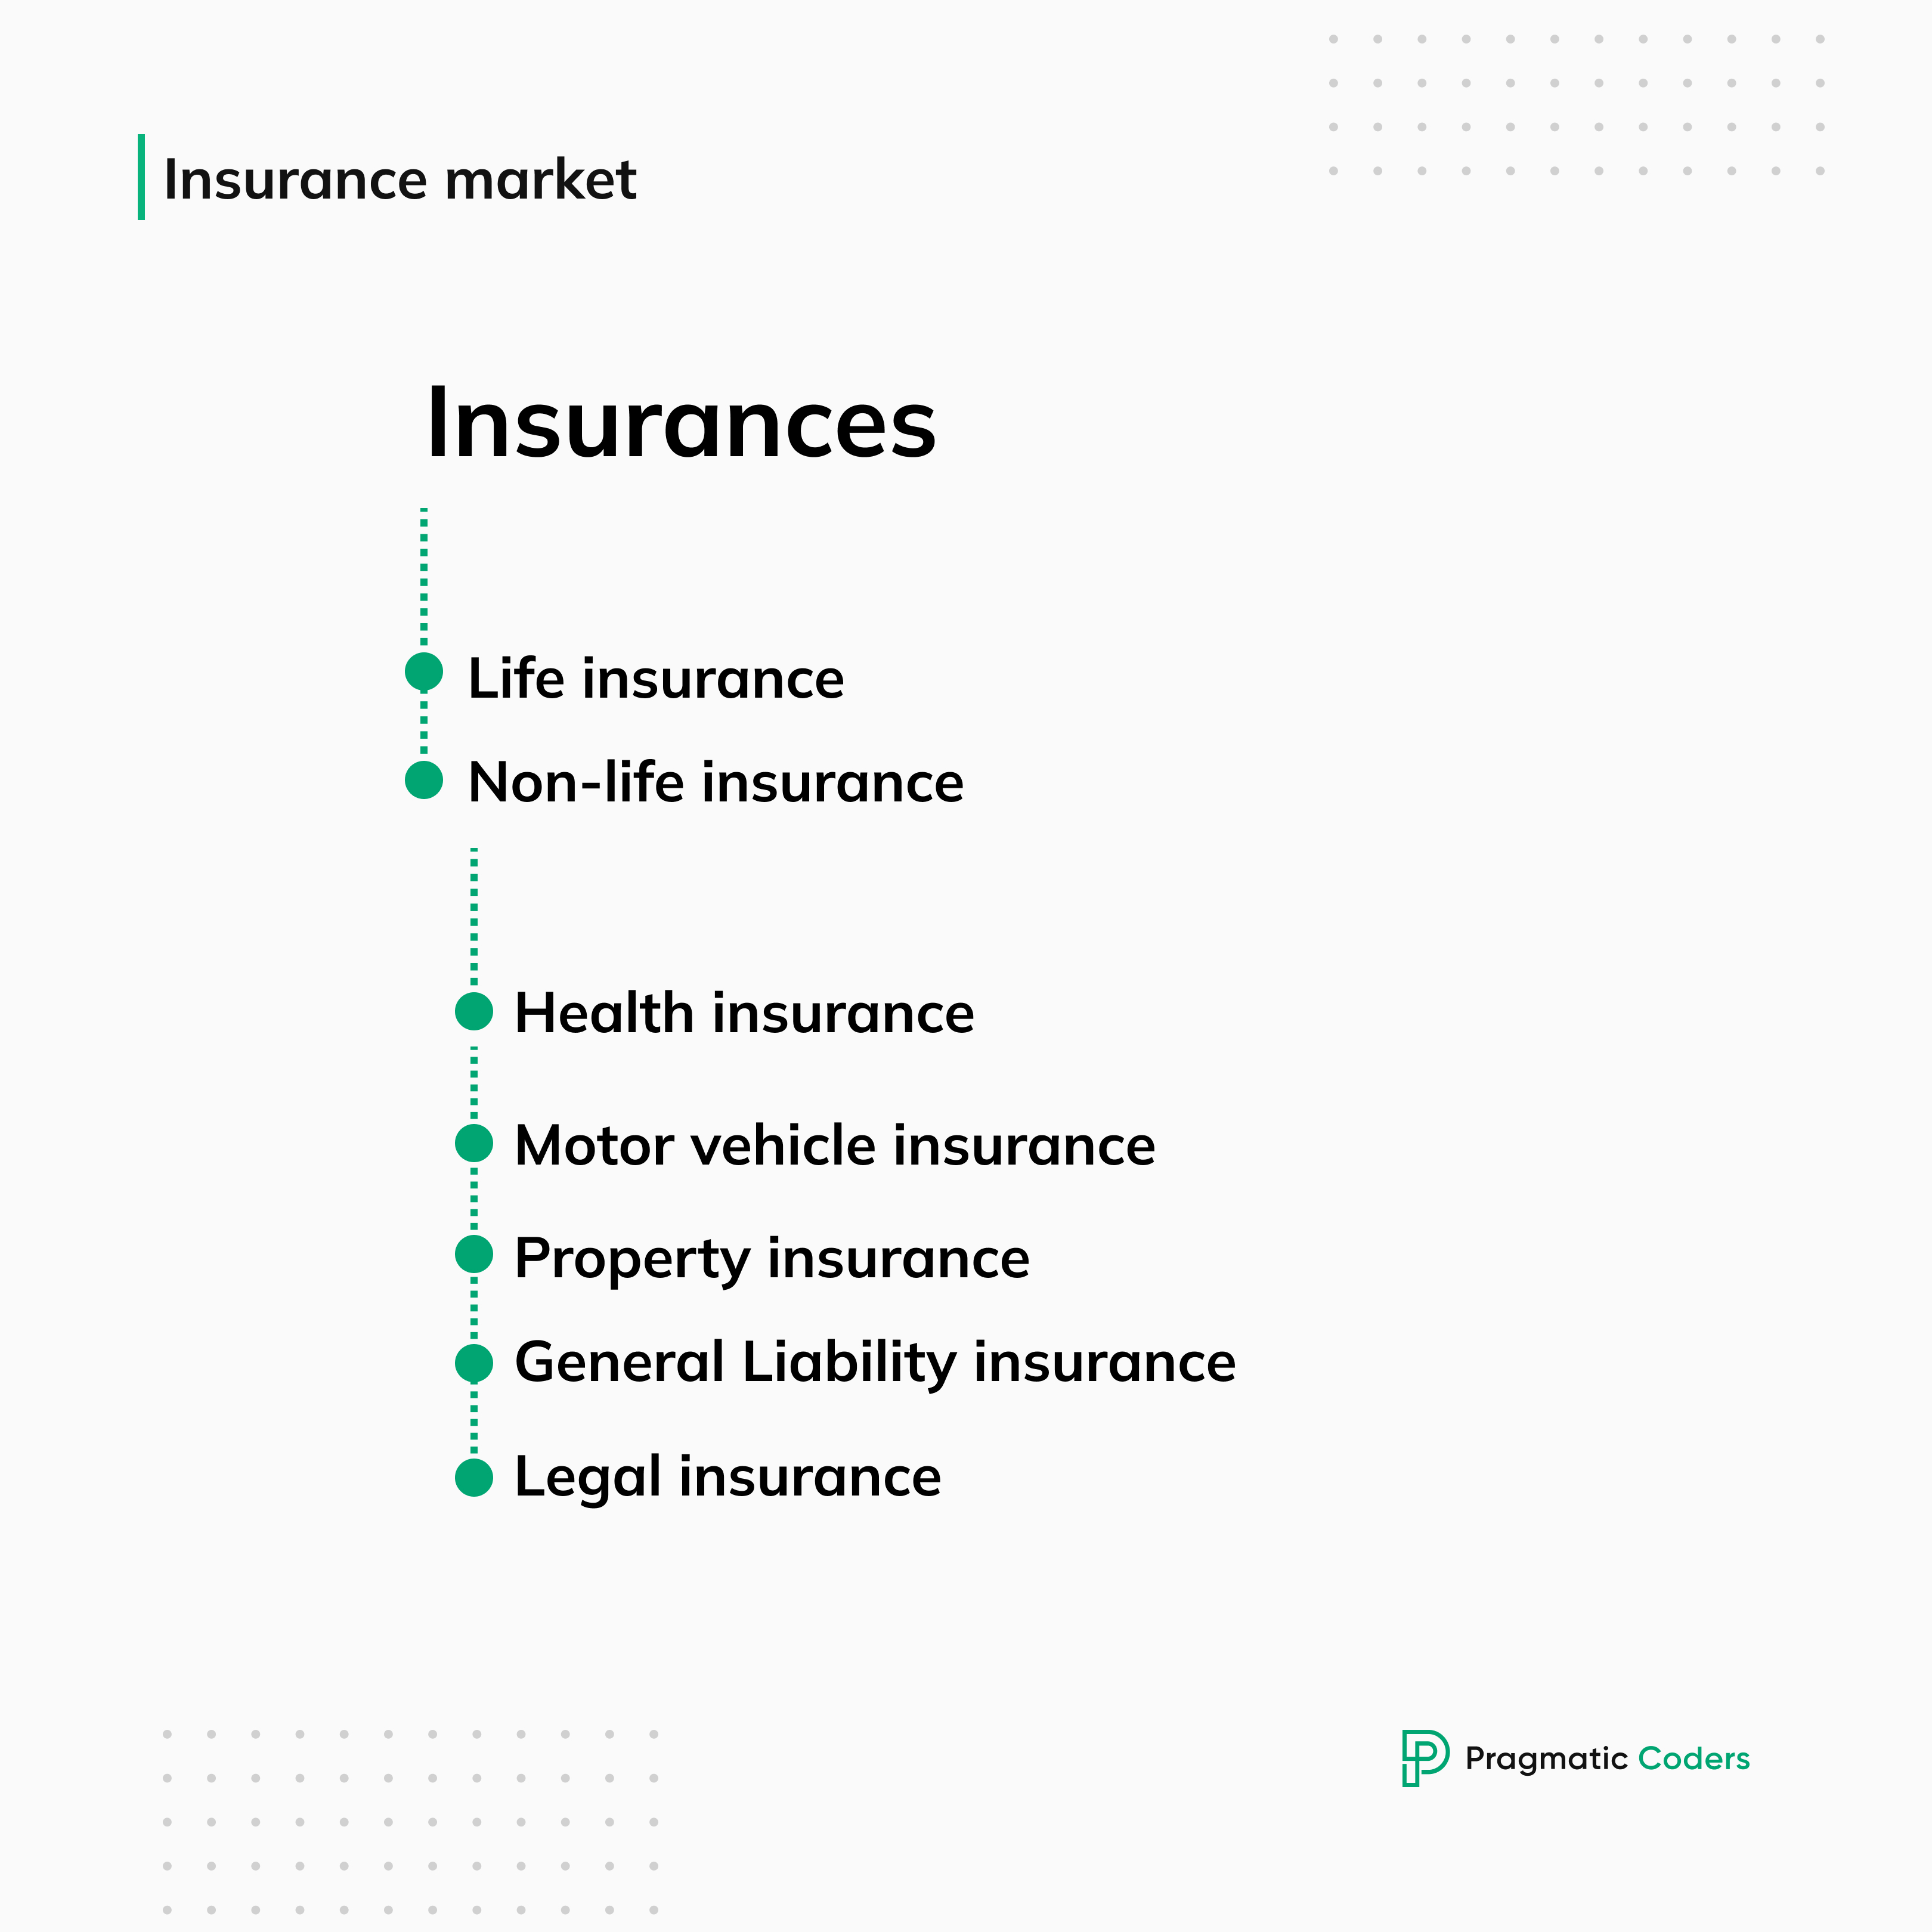 Insurance market (1)